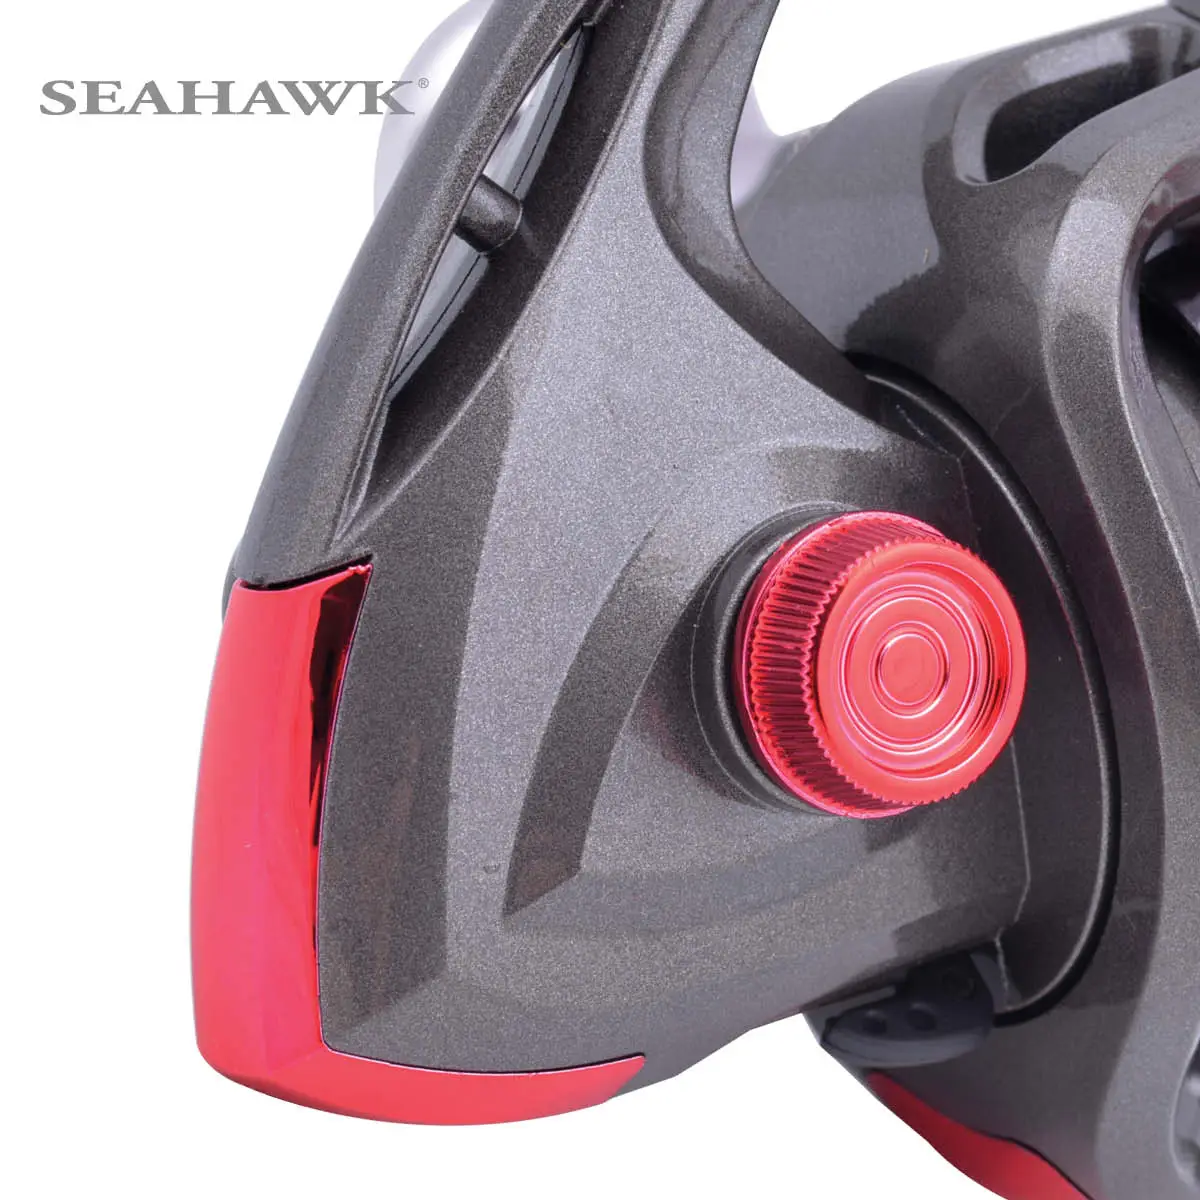 seahawk-holiday-3-hld-3-seahawk-6